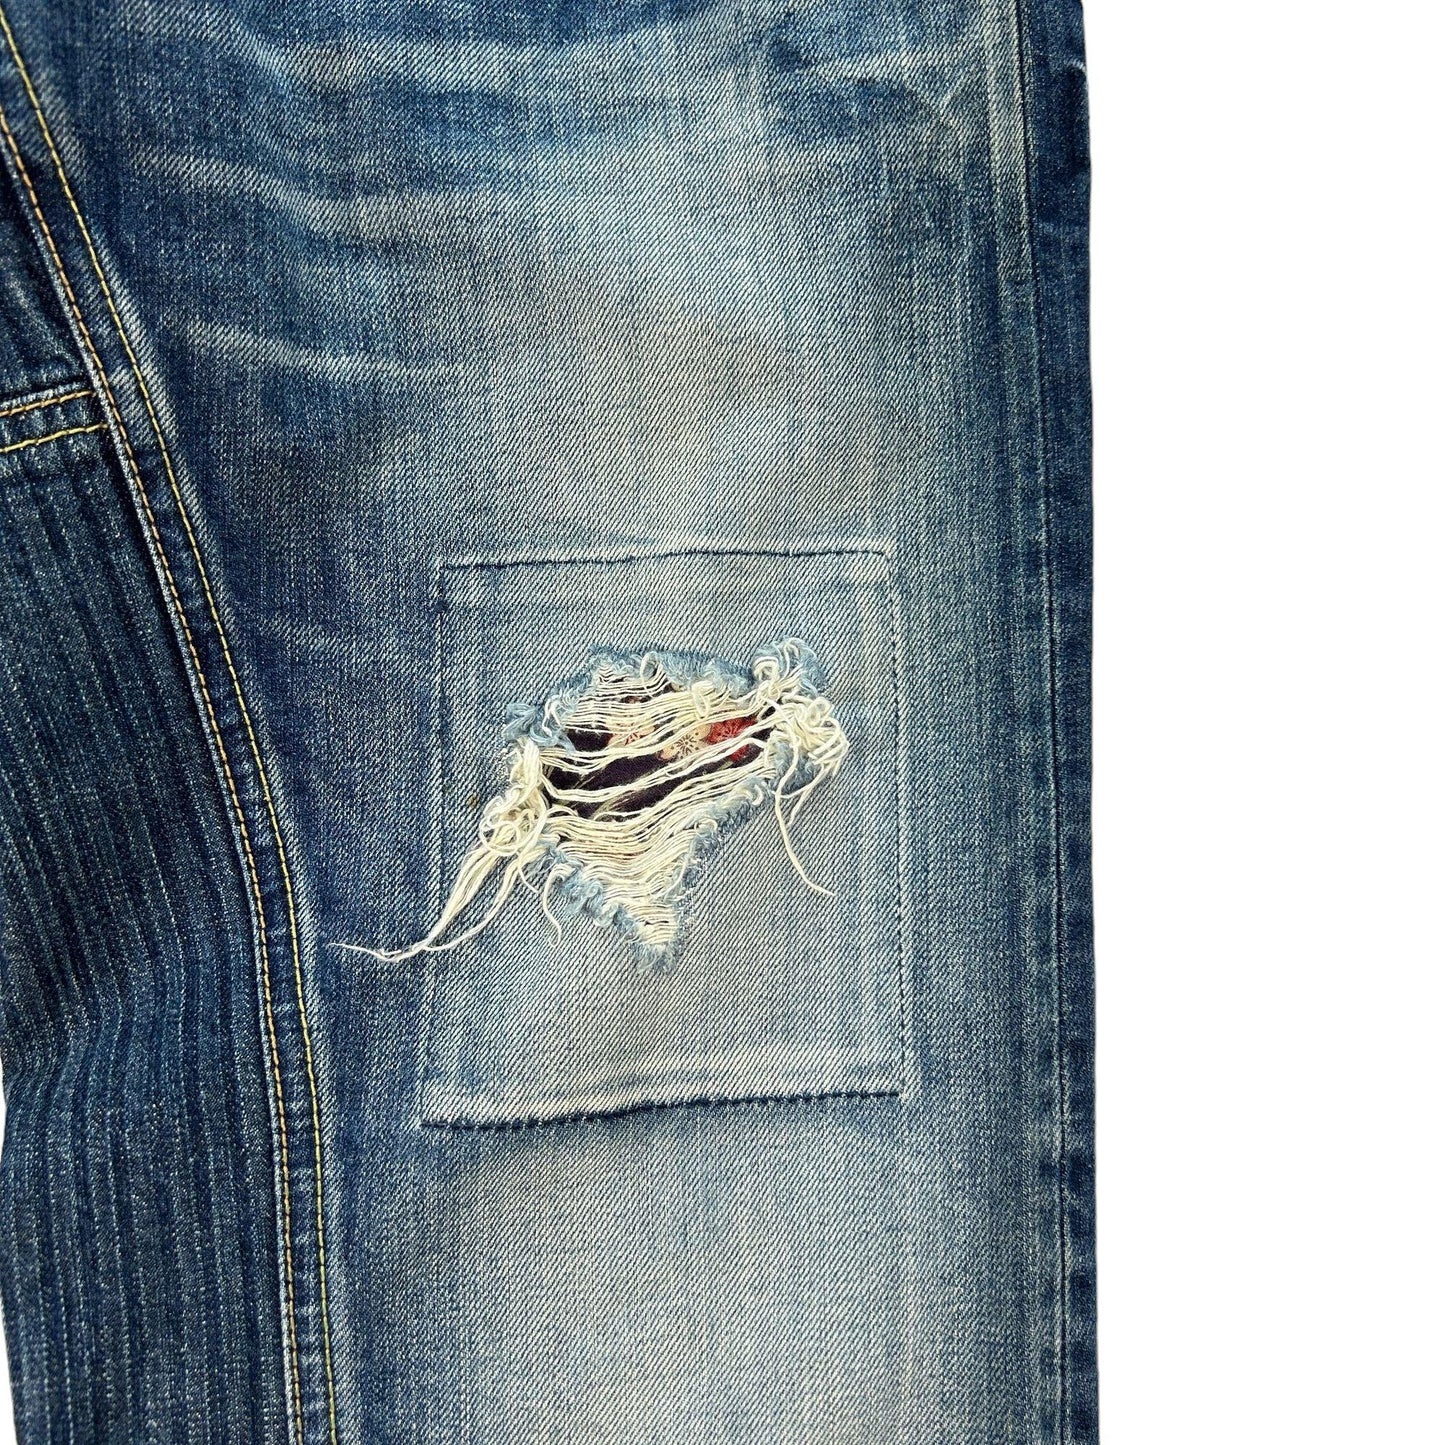 Vintage Japanese Denim Jeans Size W34 - Known Source